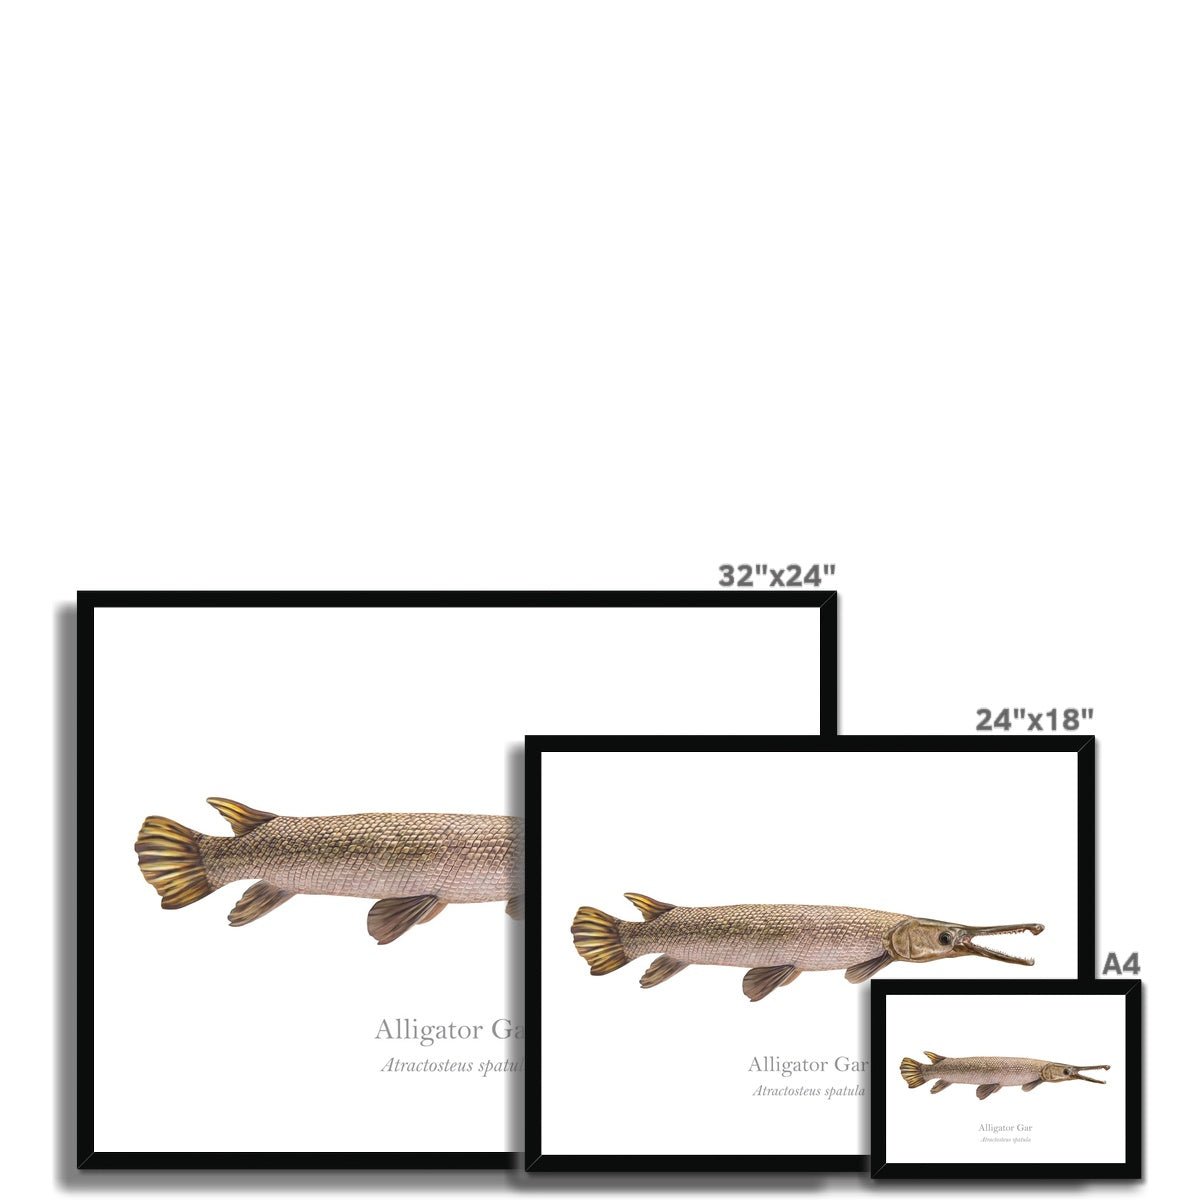 Alligator Gar - Framed Print - With Scientific Name - madfishlab.com